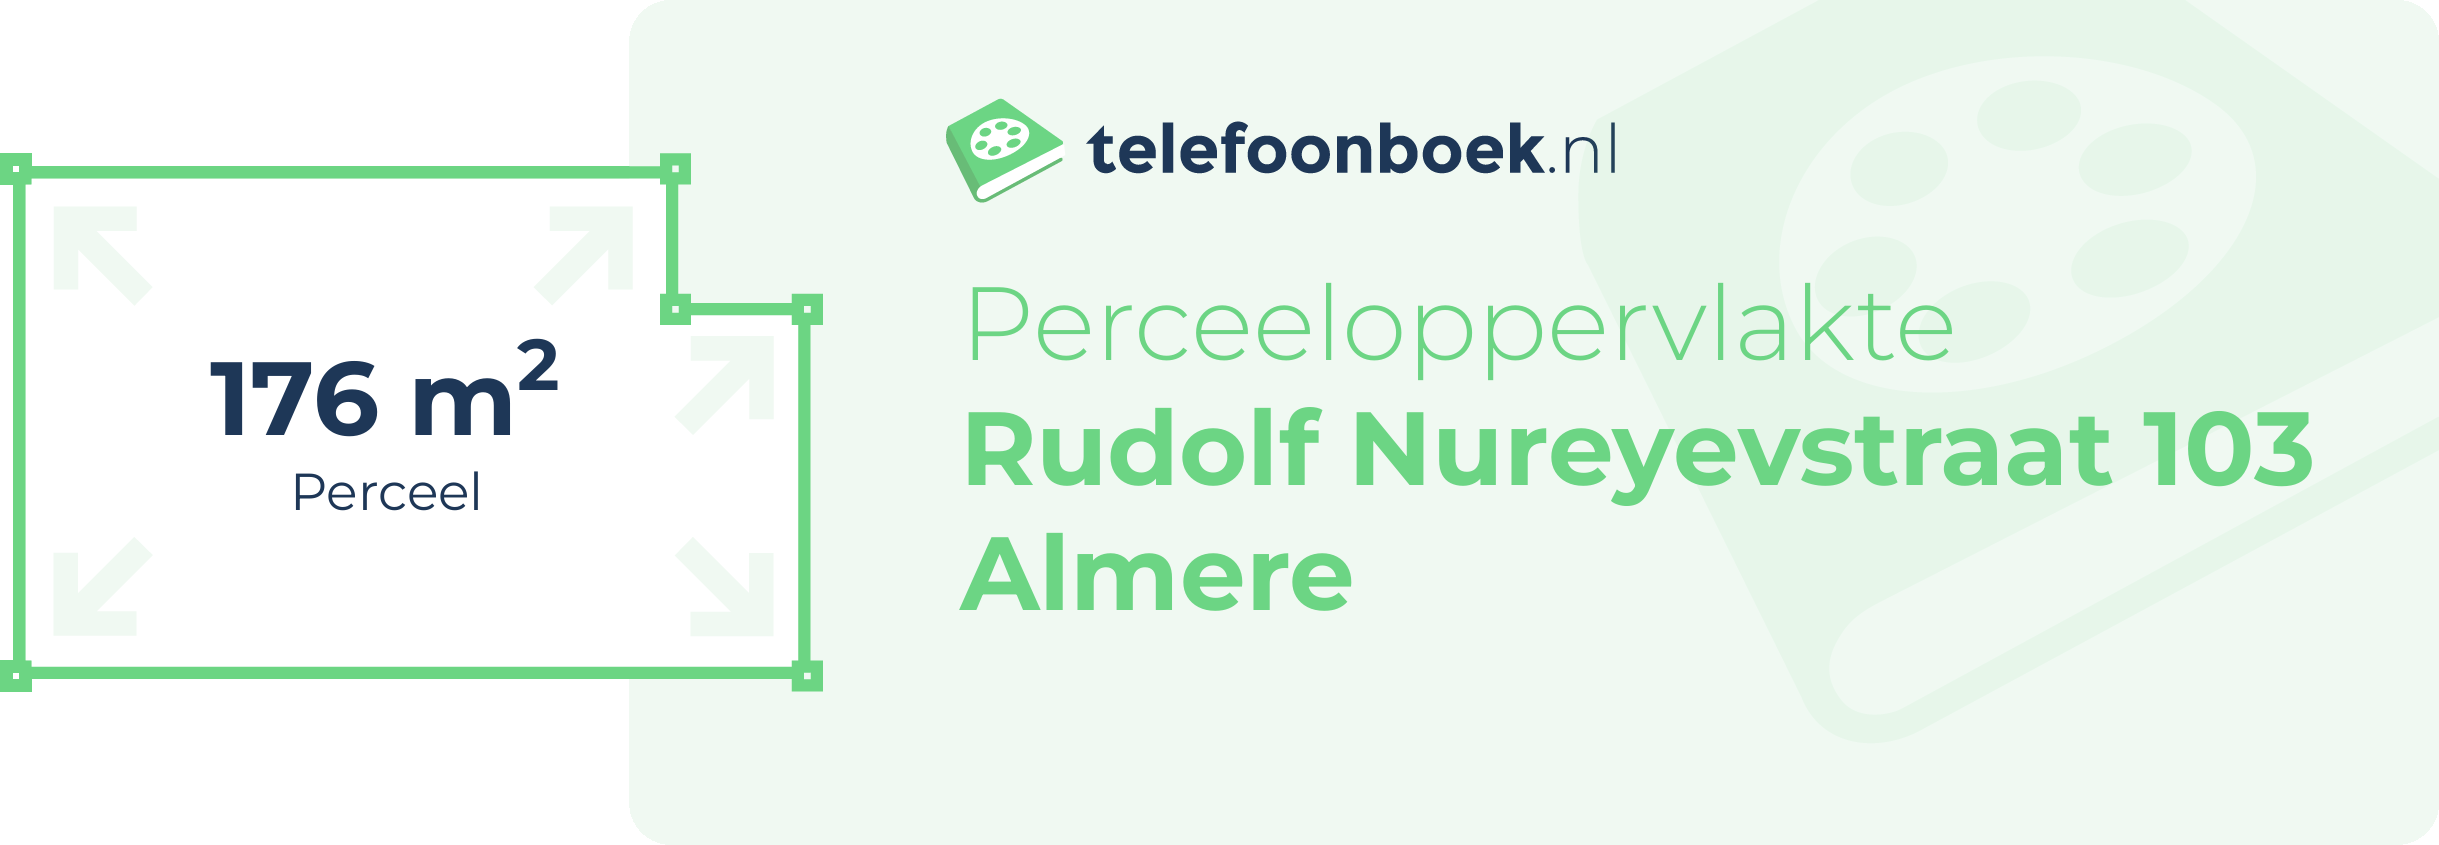 Perceeloppervlakte Rudolf Nureyevstraat 103 Almere